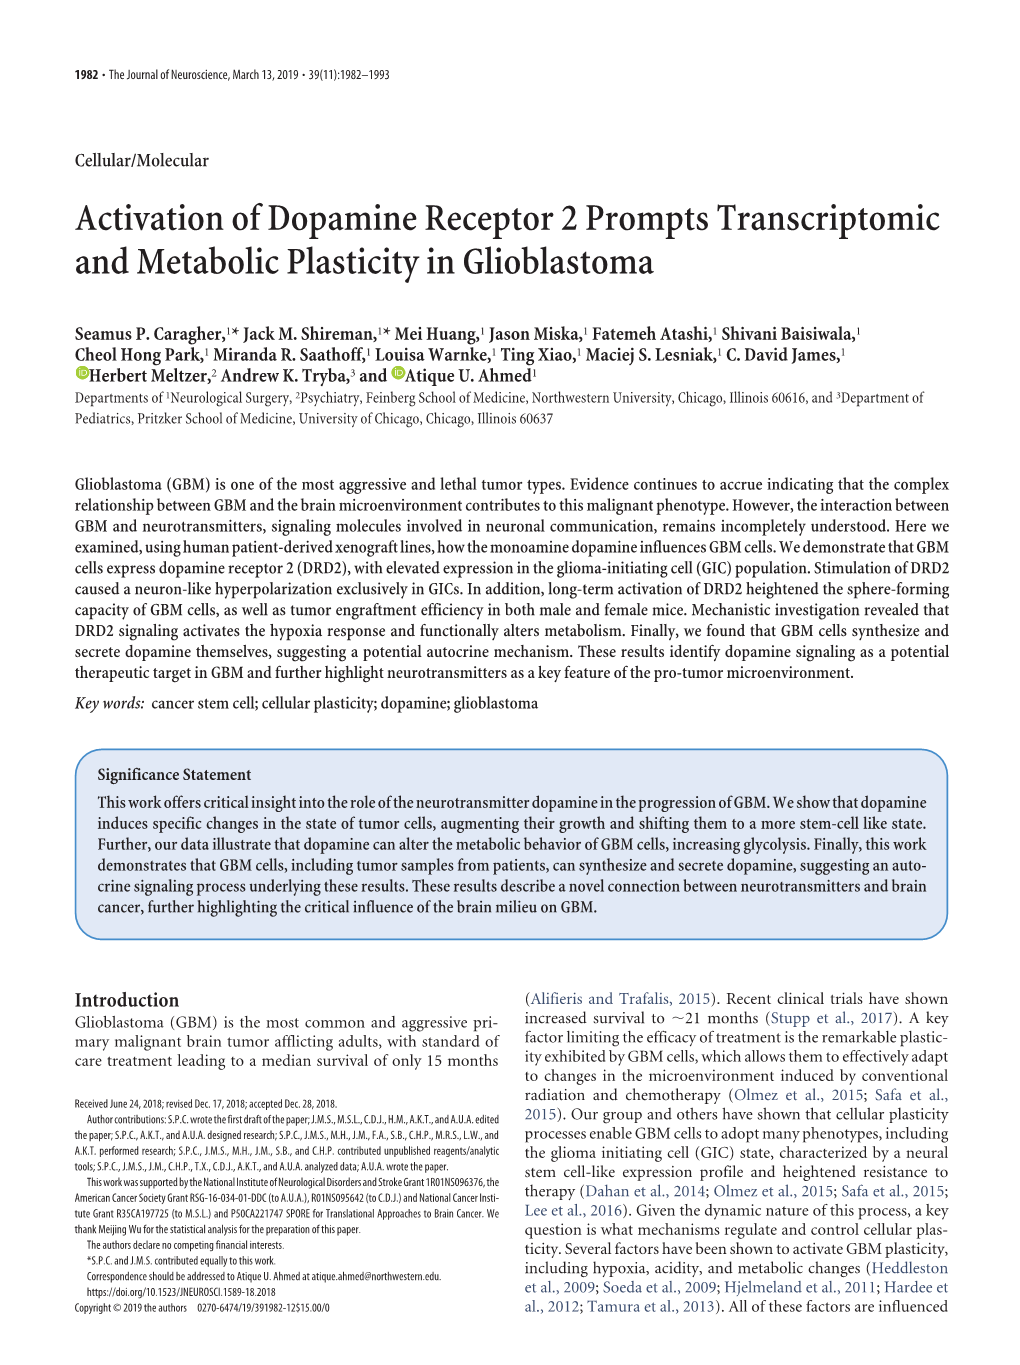 Activation of Dopamine Receptor 2 Prompts Transcriptomic and Metabolic Plasticity in Glioblastoma